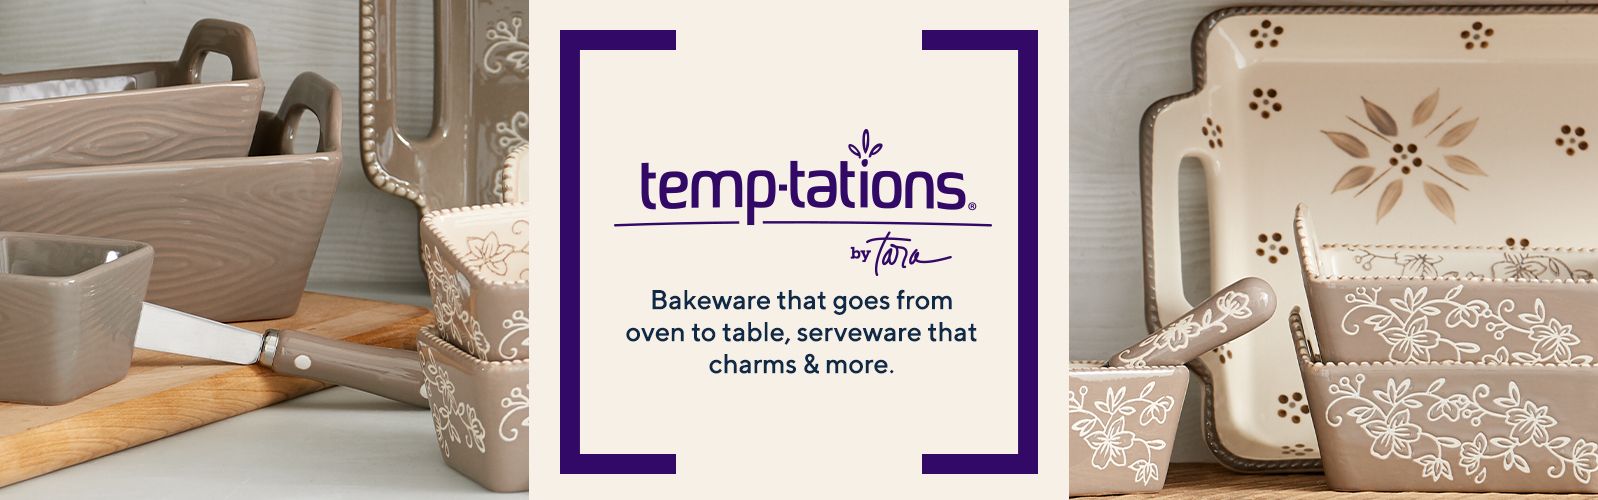 Temptations, Kitchen